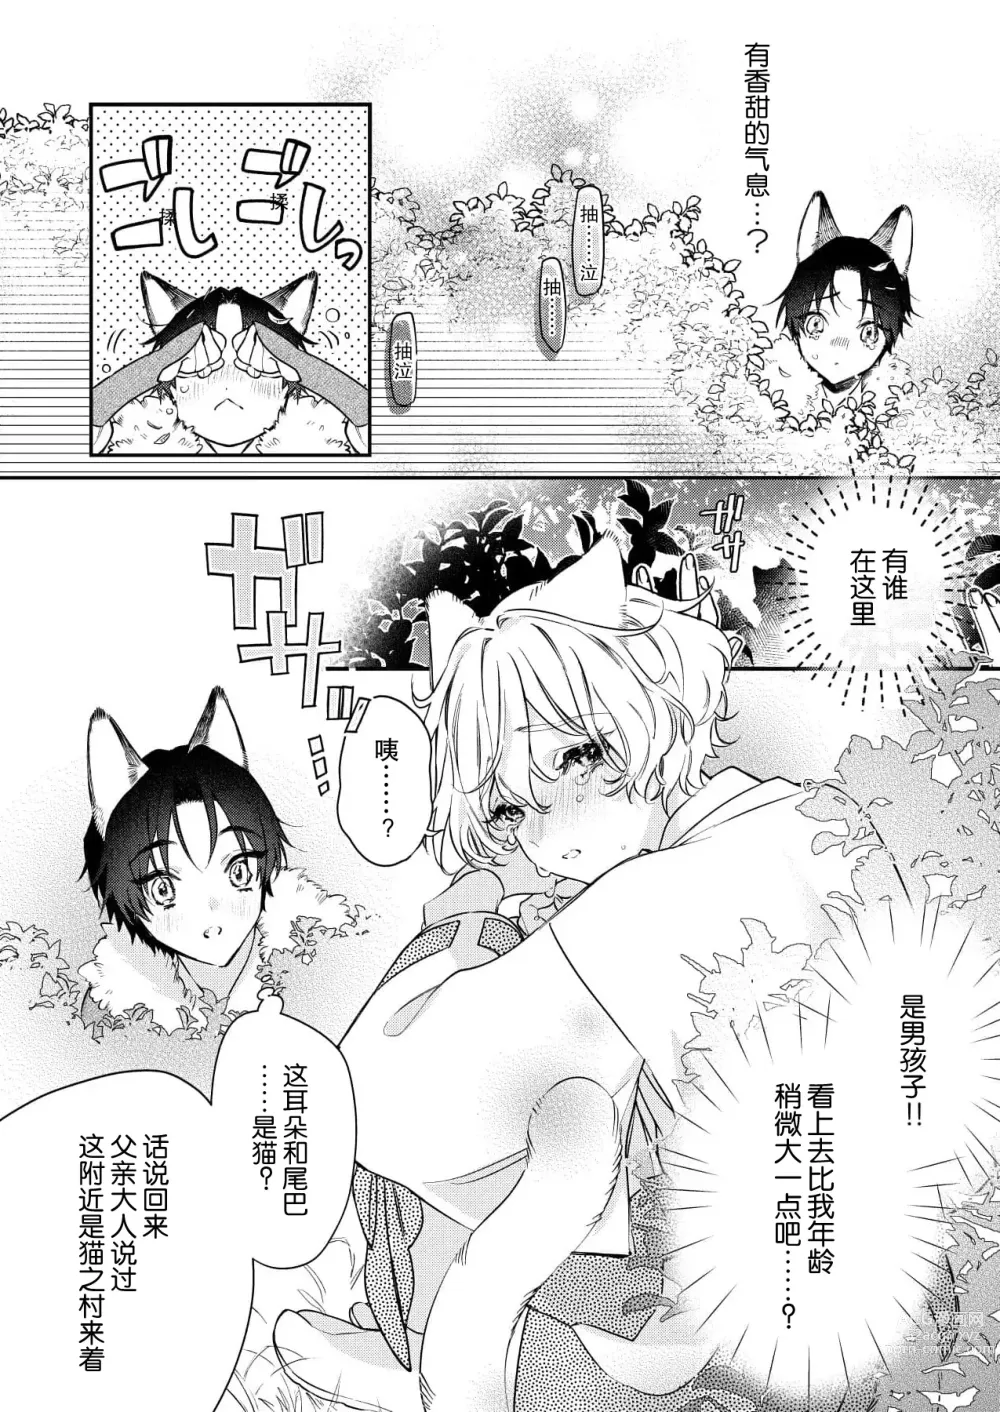 Page 3 of manga 无可奈何花落去 只叹道，命运使然 1-7 end